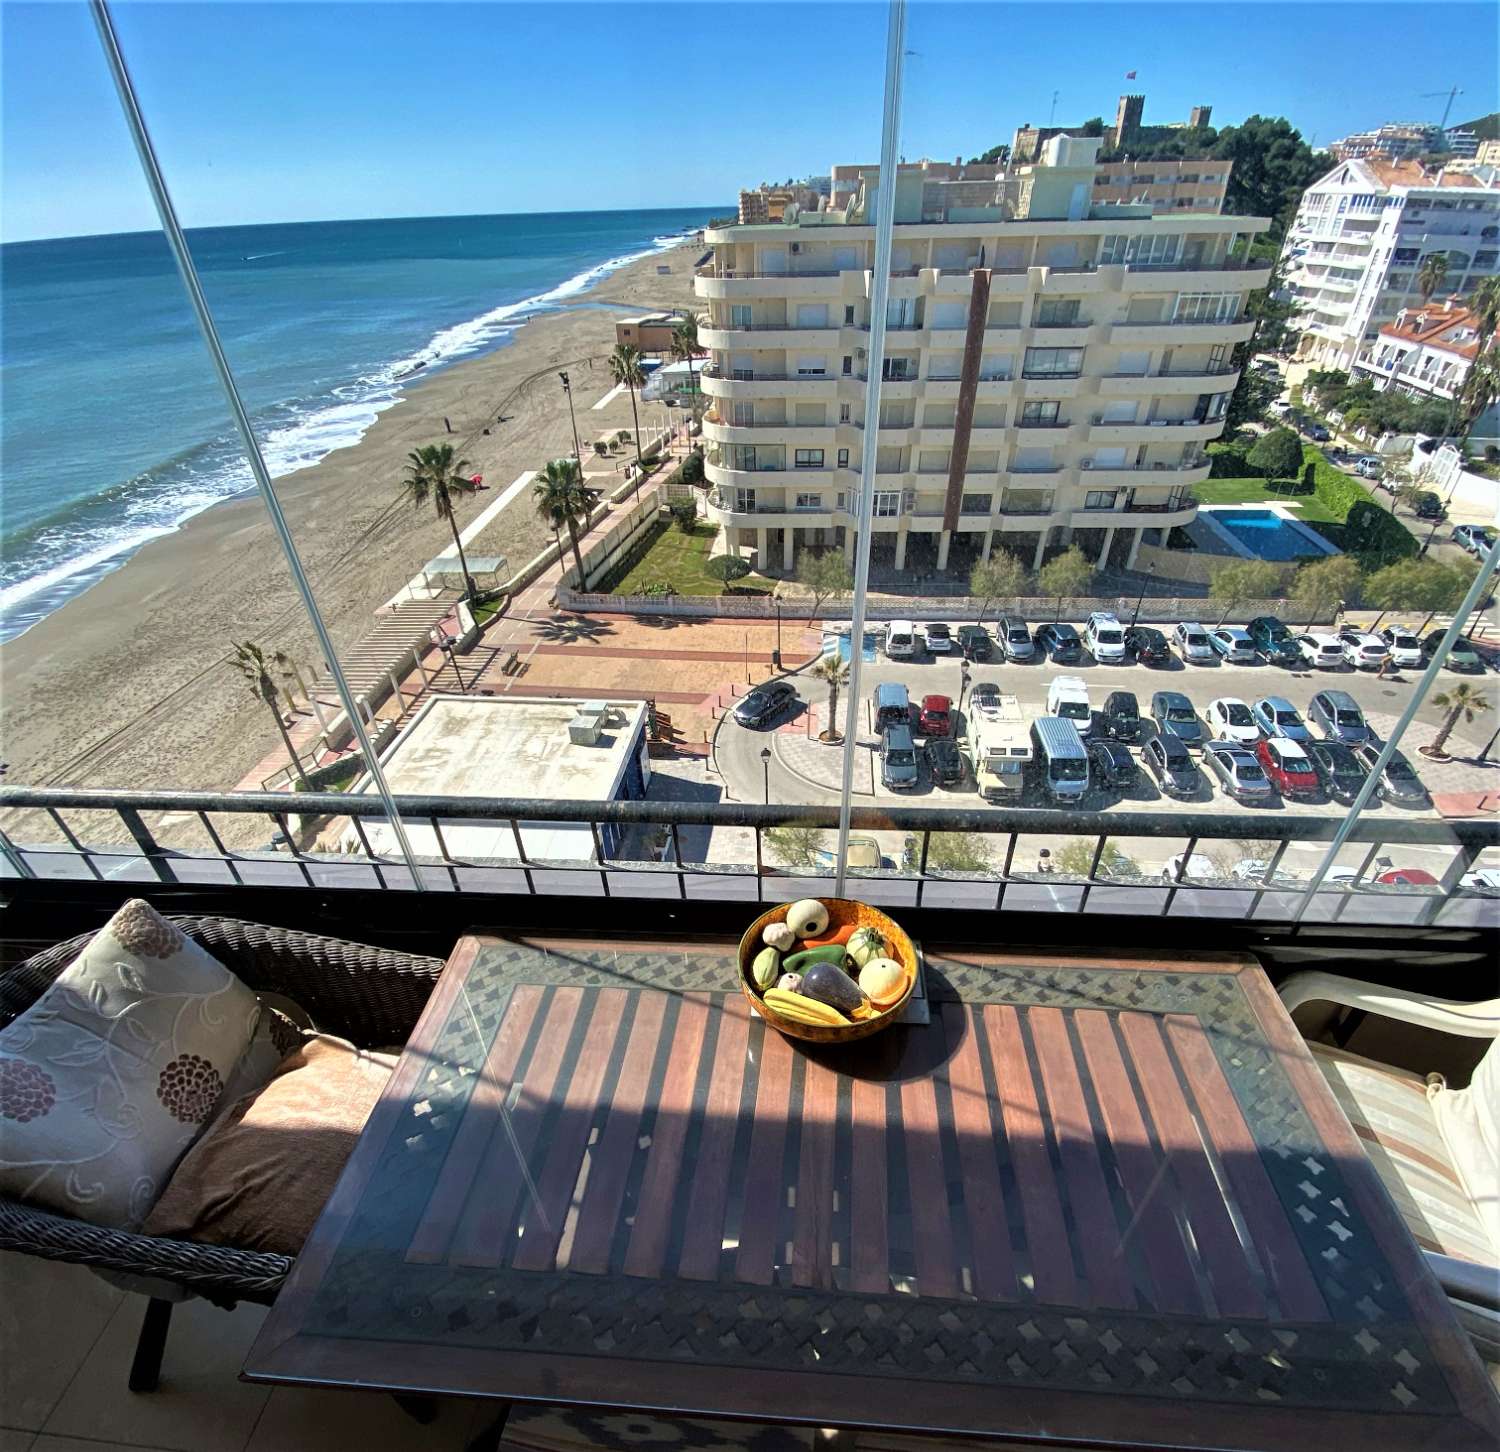 Fuengirola, 1 sovrum, panoramautsikt, gratis Wi-Fi, pool, första linjens strand.